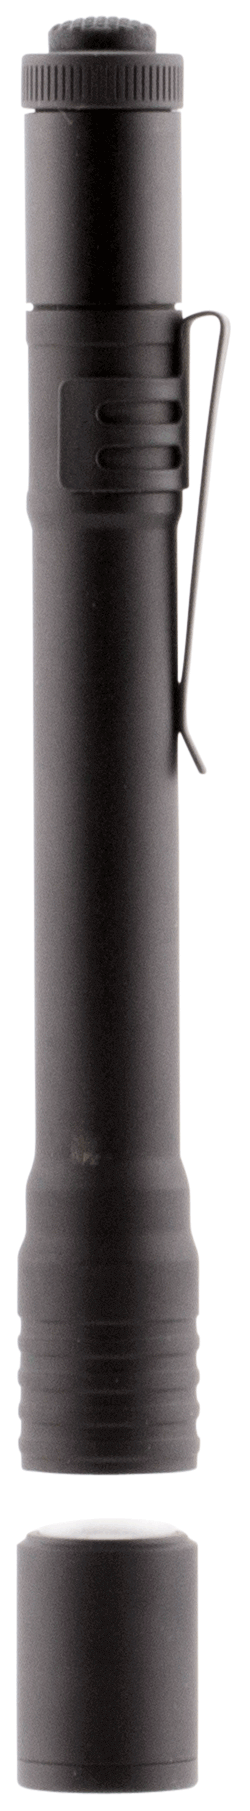 Streamlight 66218 Stylus Pro 360 Penlight Black Anodized Aluminum White LED 65 Lumens 41 Meters Range